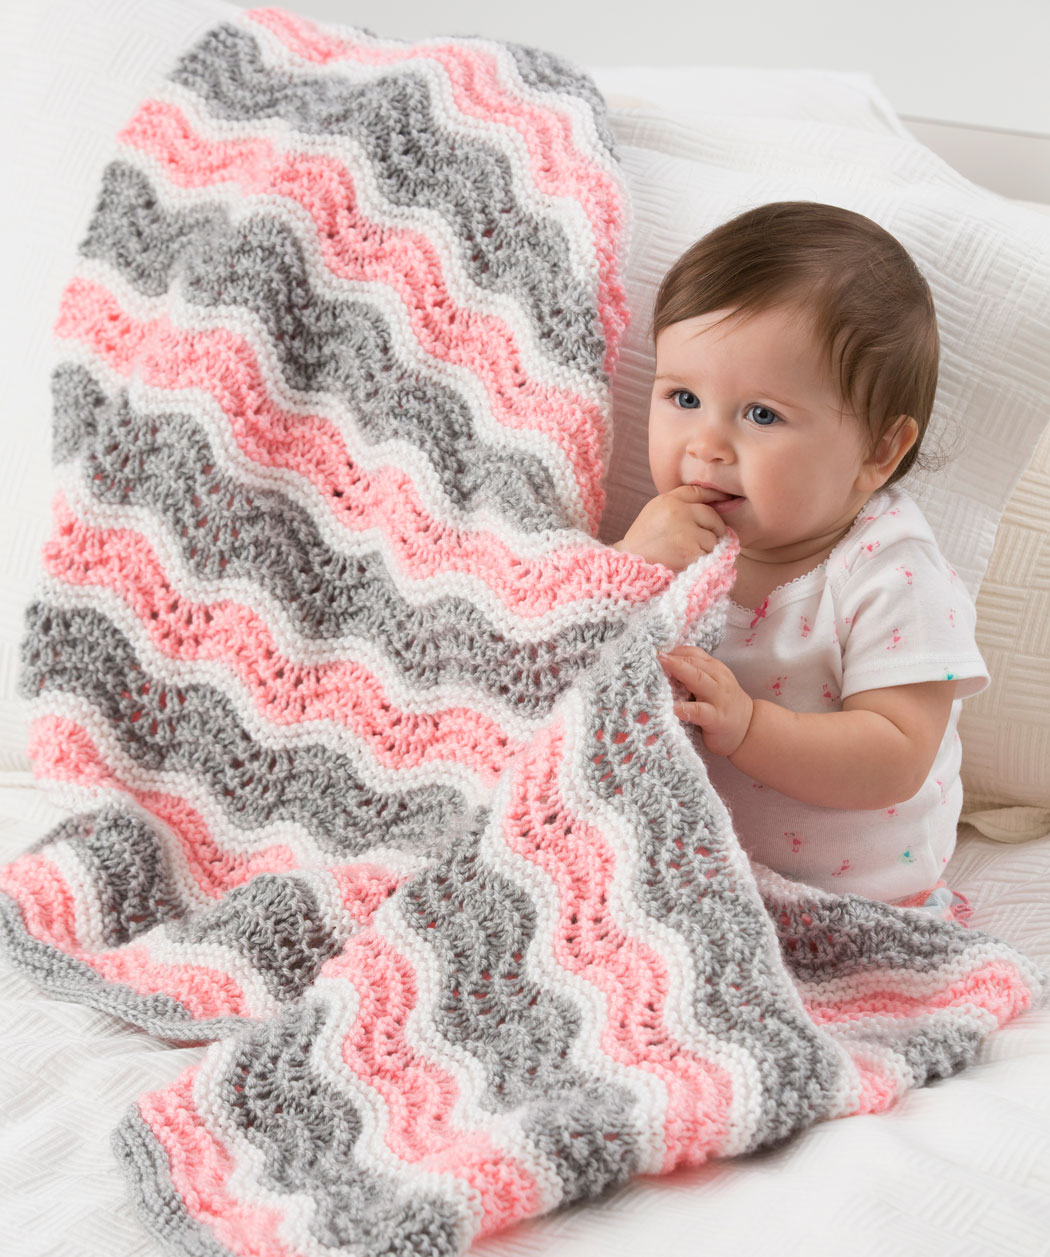 knitting patterns for babies 1 xxjbxzg